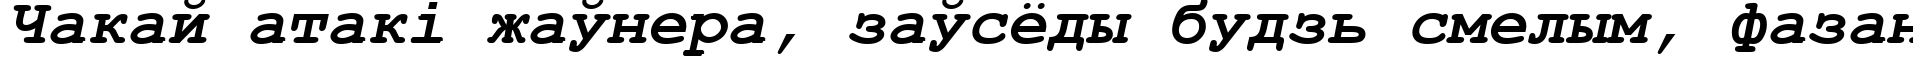 Пример написания шрифтом Courier New Cyr Bold Italic текста на белорусском